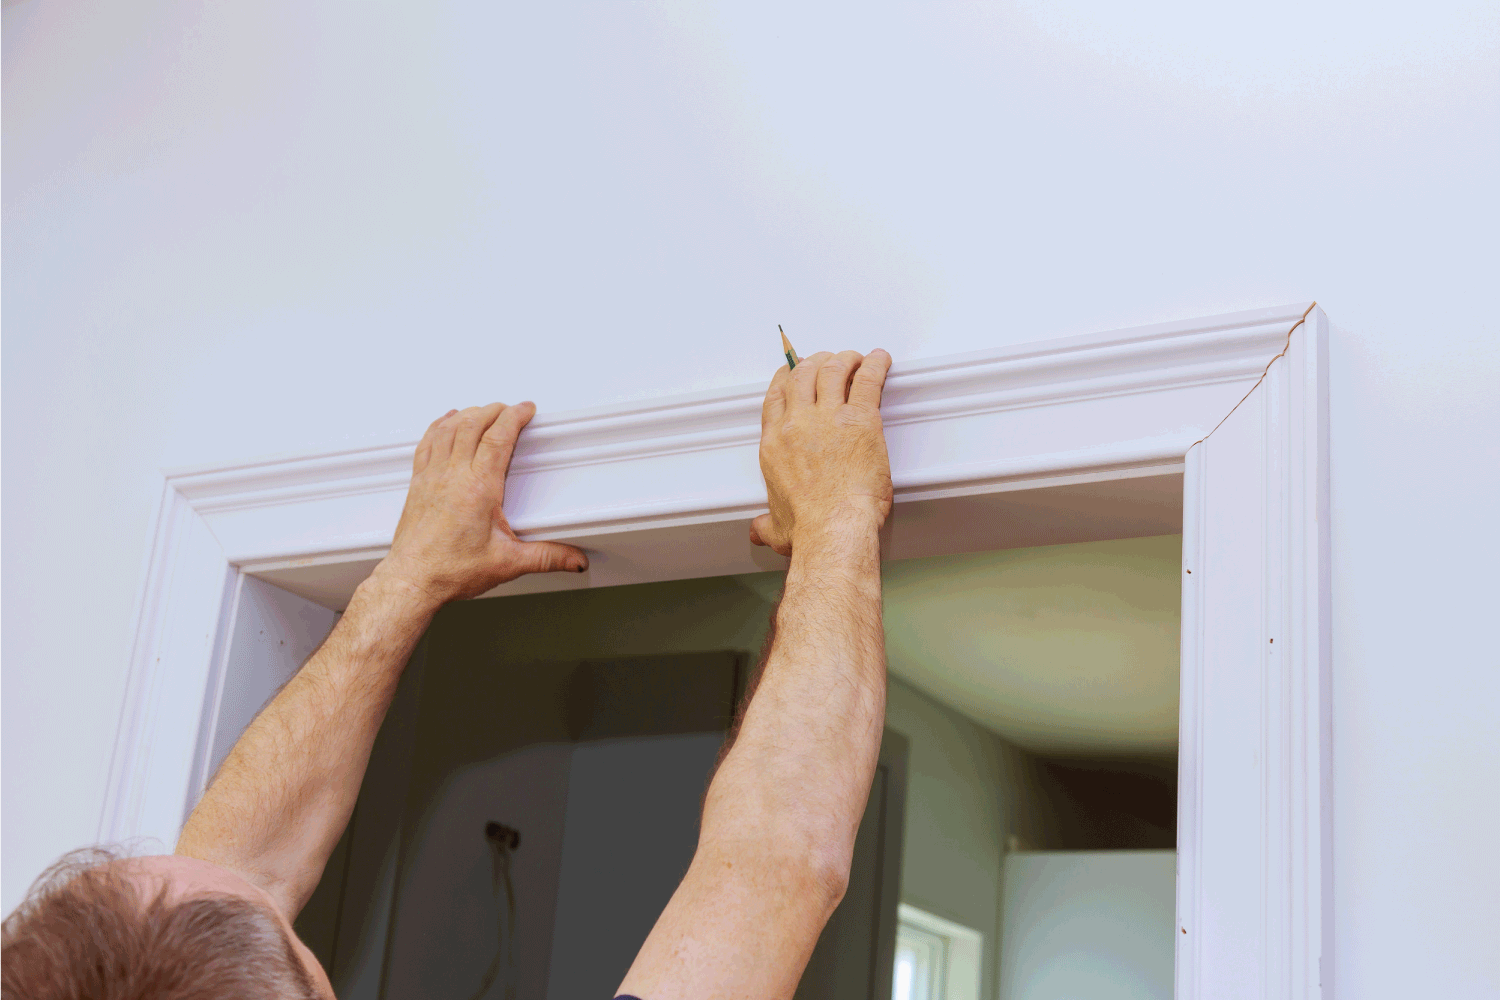 Construction handyman is working on renovation of apartment of door molding